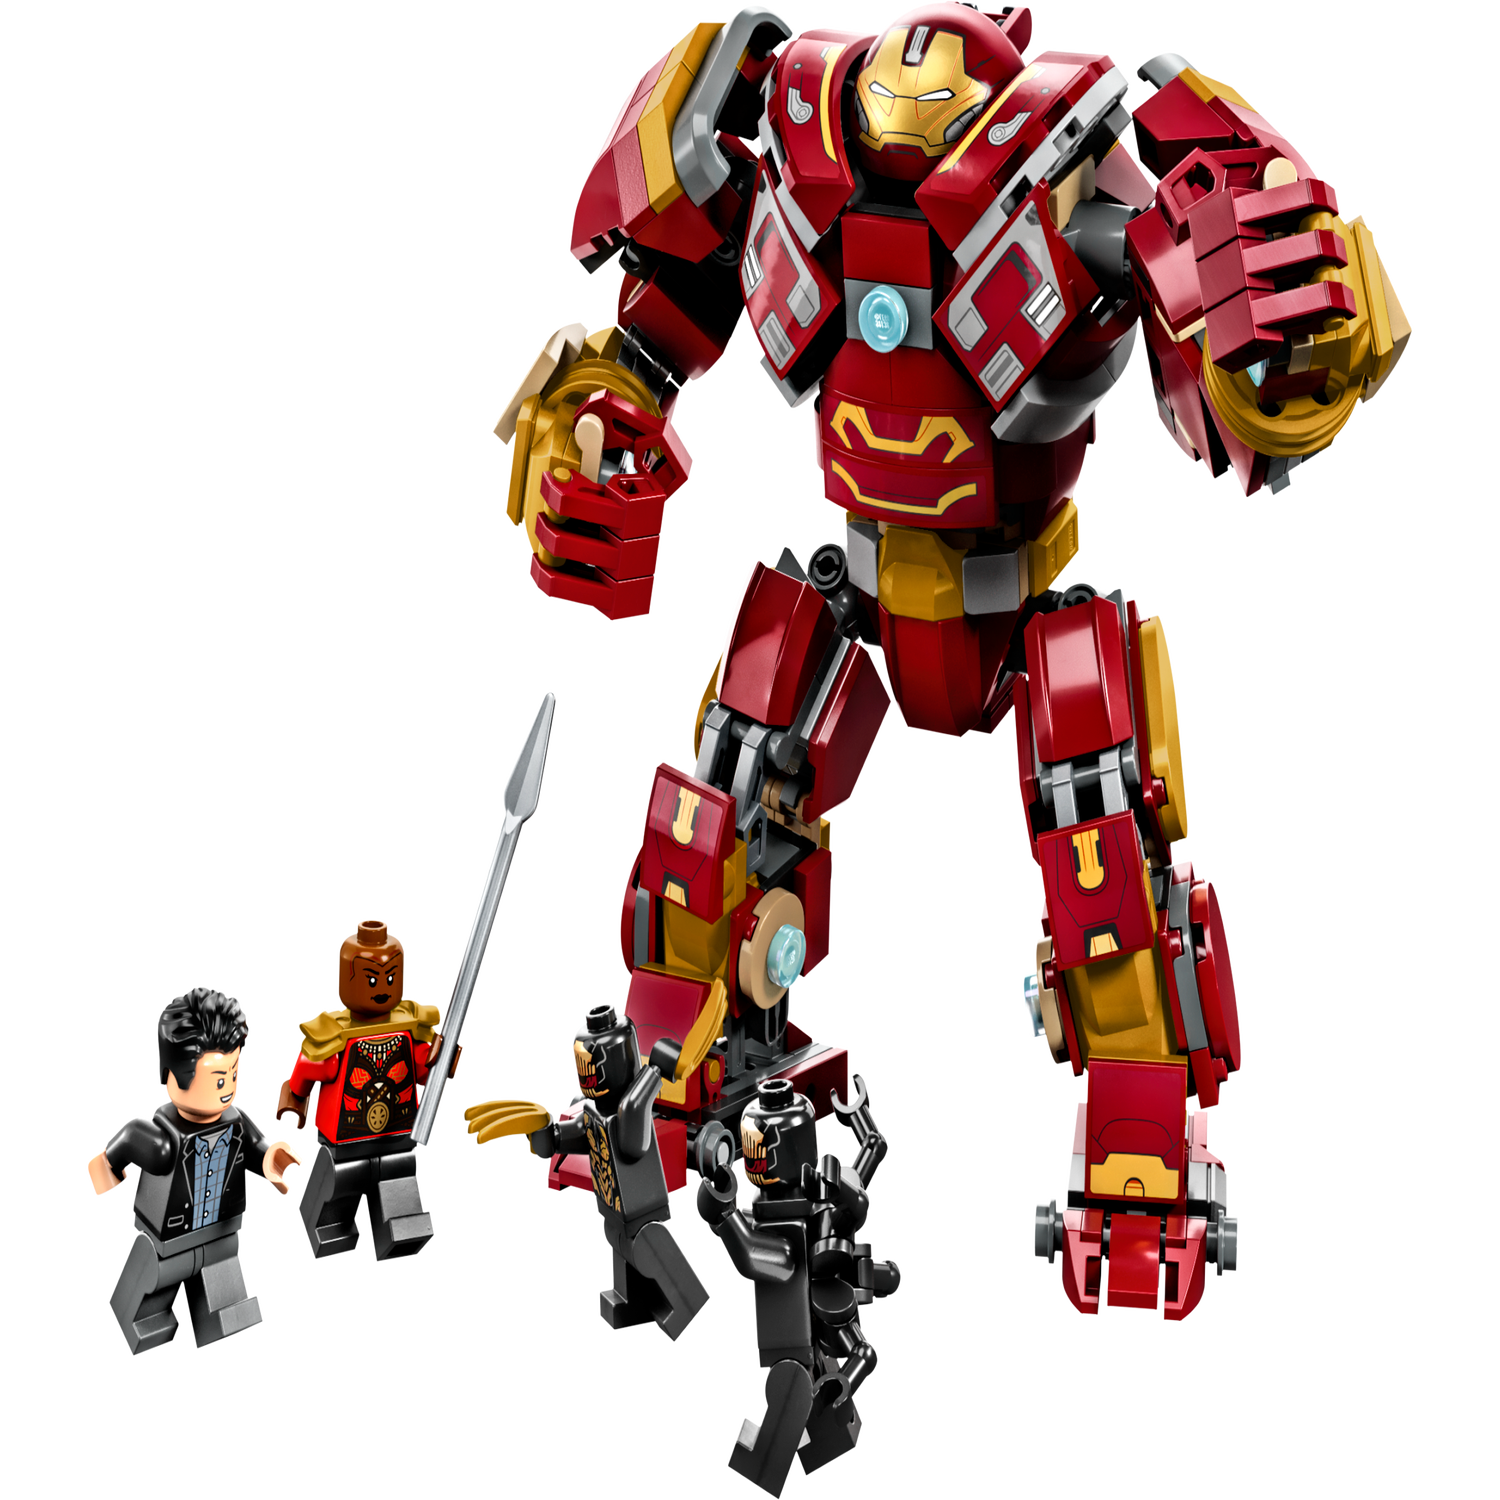 lego-marvel-super-heroes-avengers-infinity-war-the-hulkbuster-smash-up-76104-building-kit-375